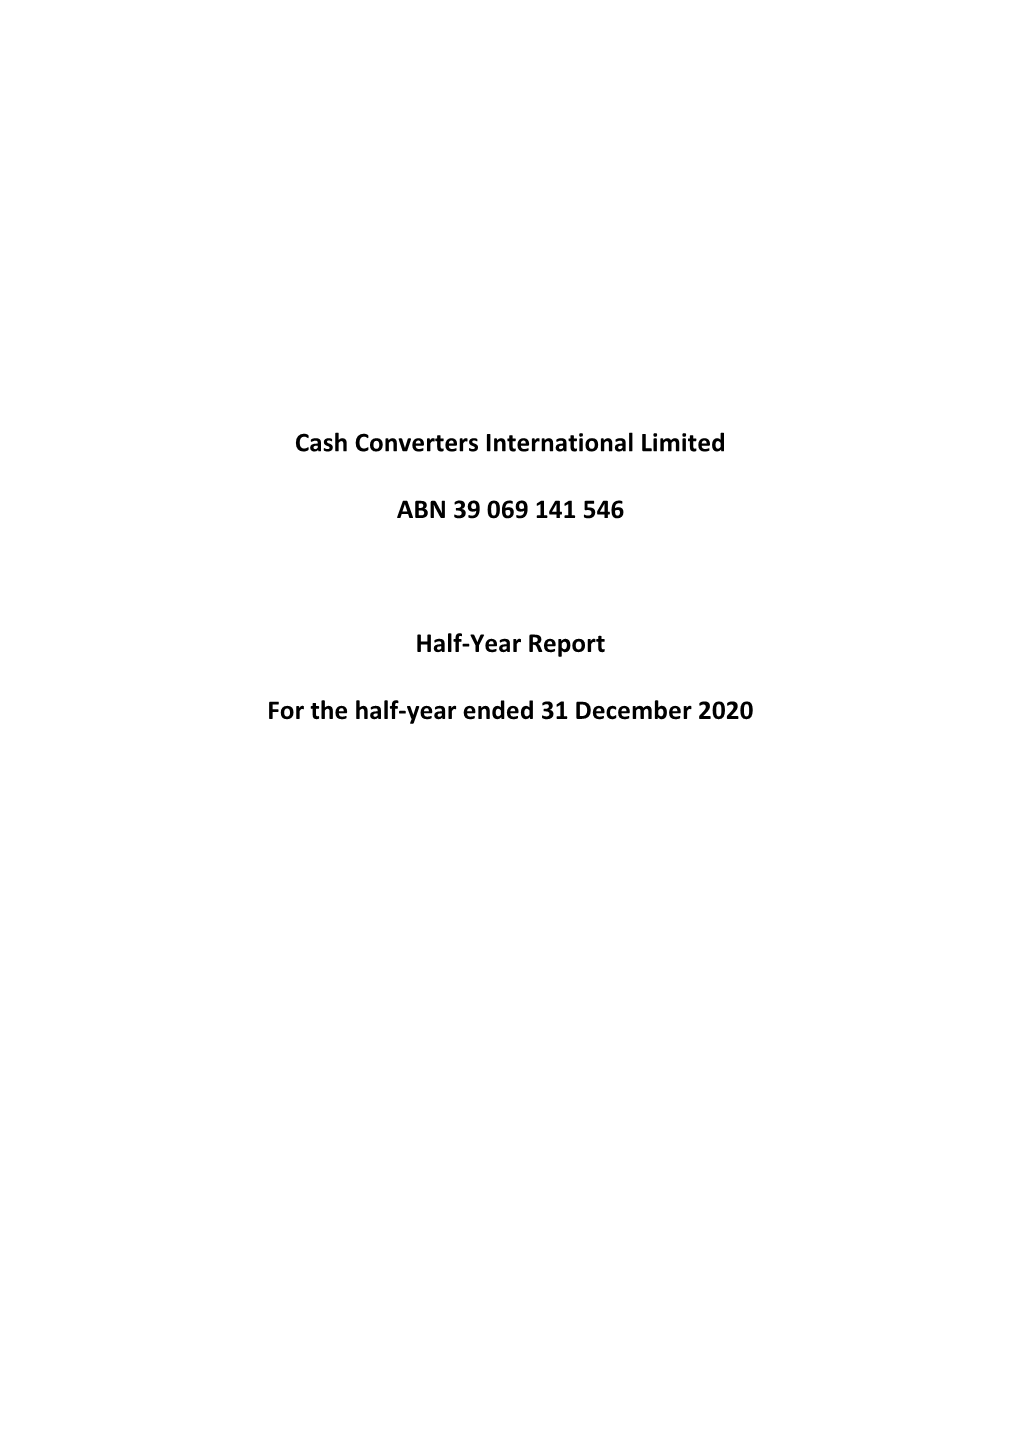 Cash Converters International Limited ABN 39 069 141 546 Half-Year